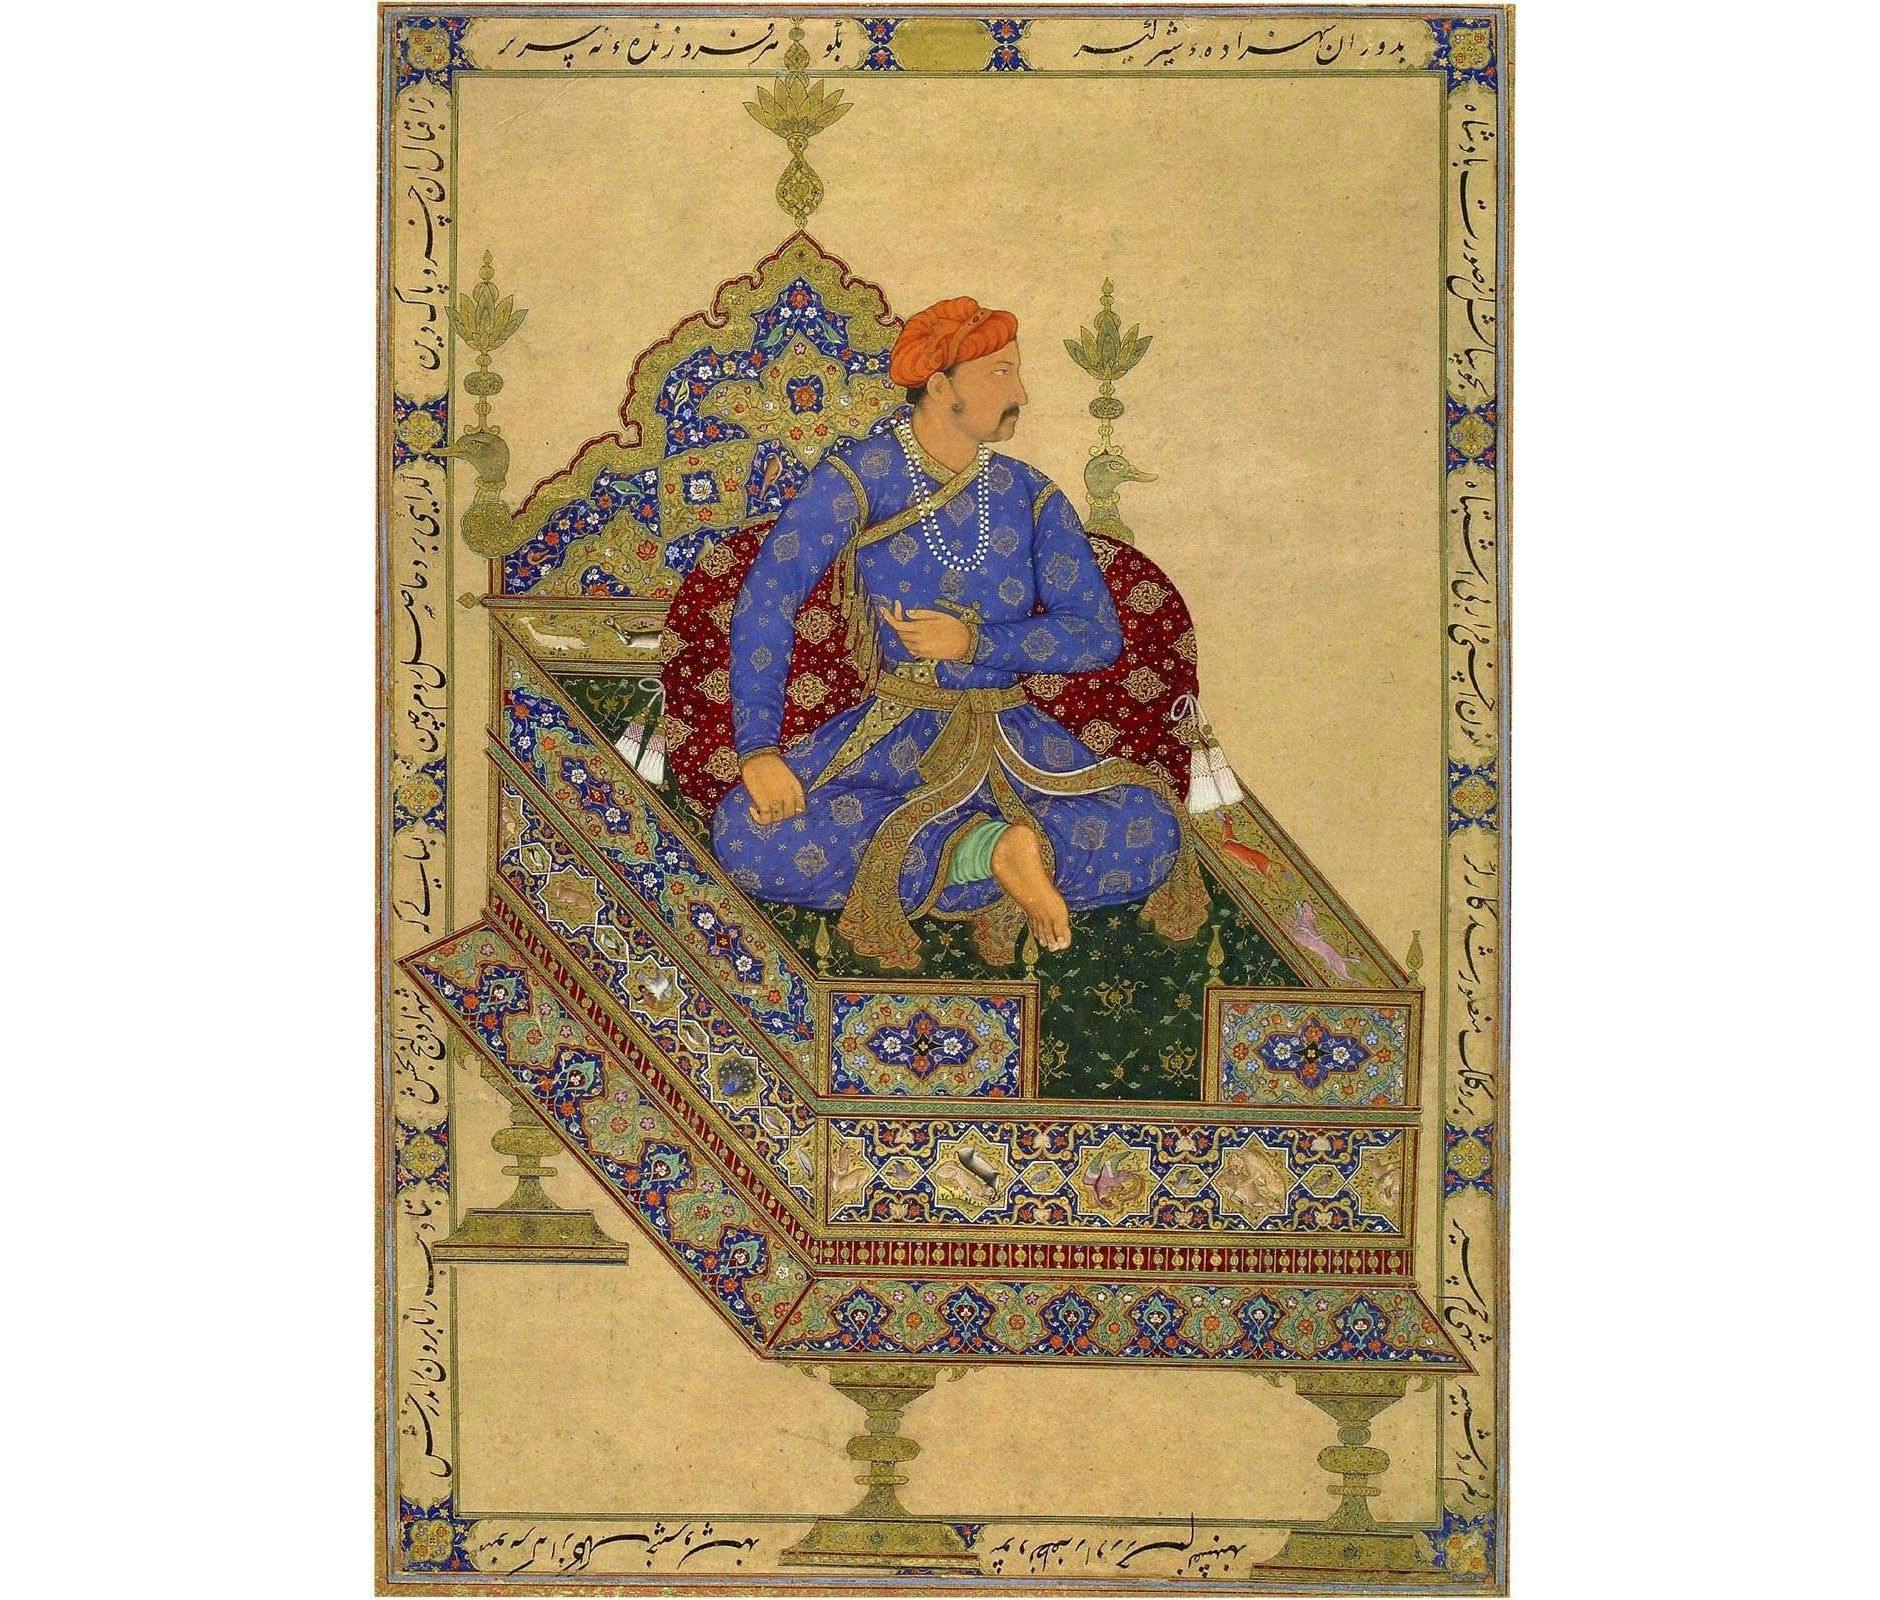 Prince Salim, the future Jahangir